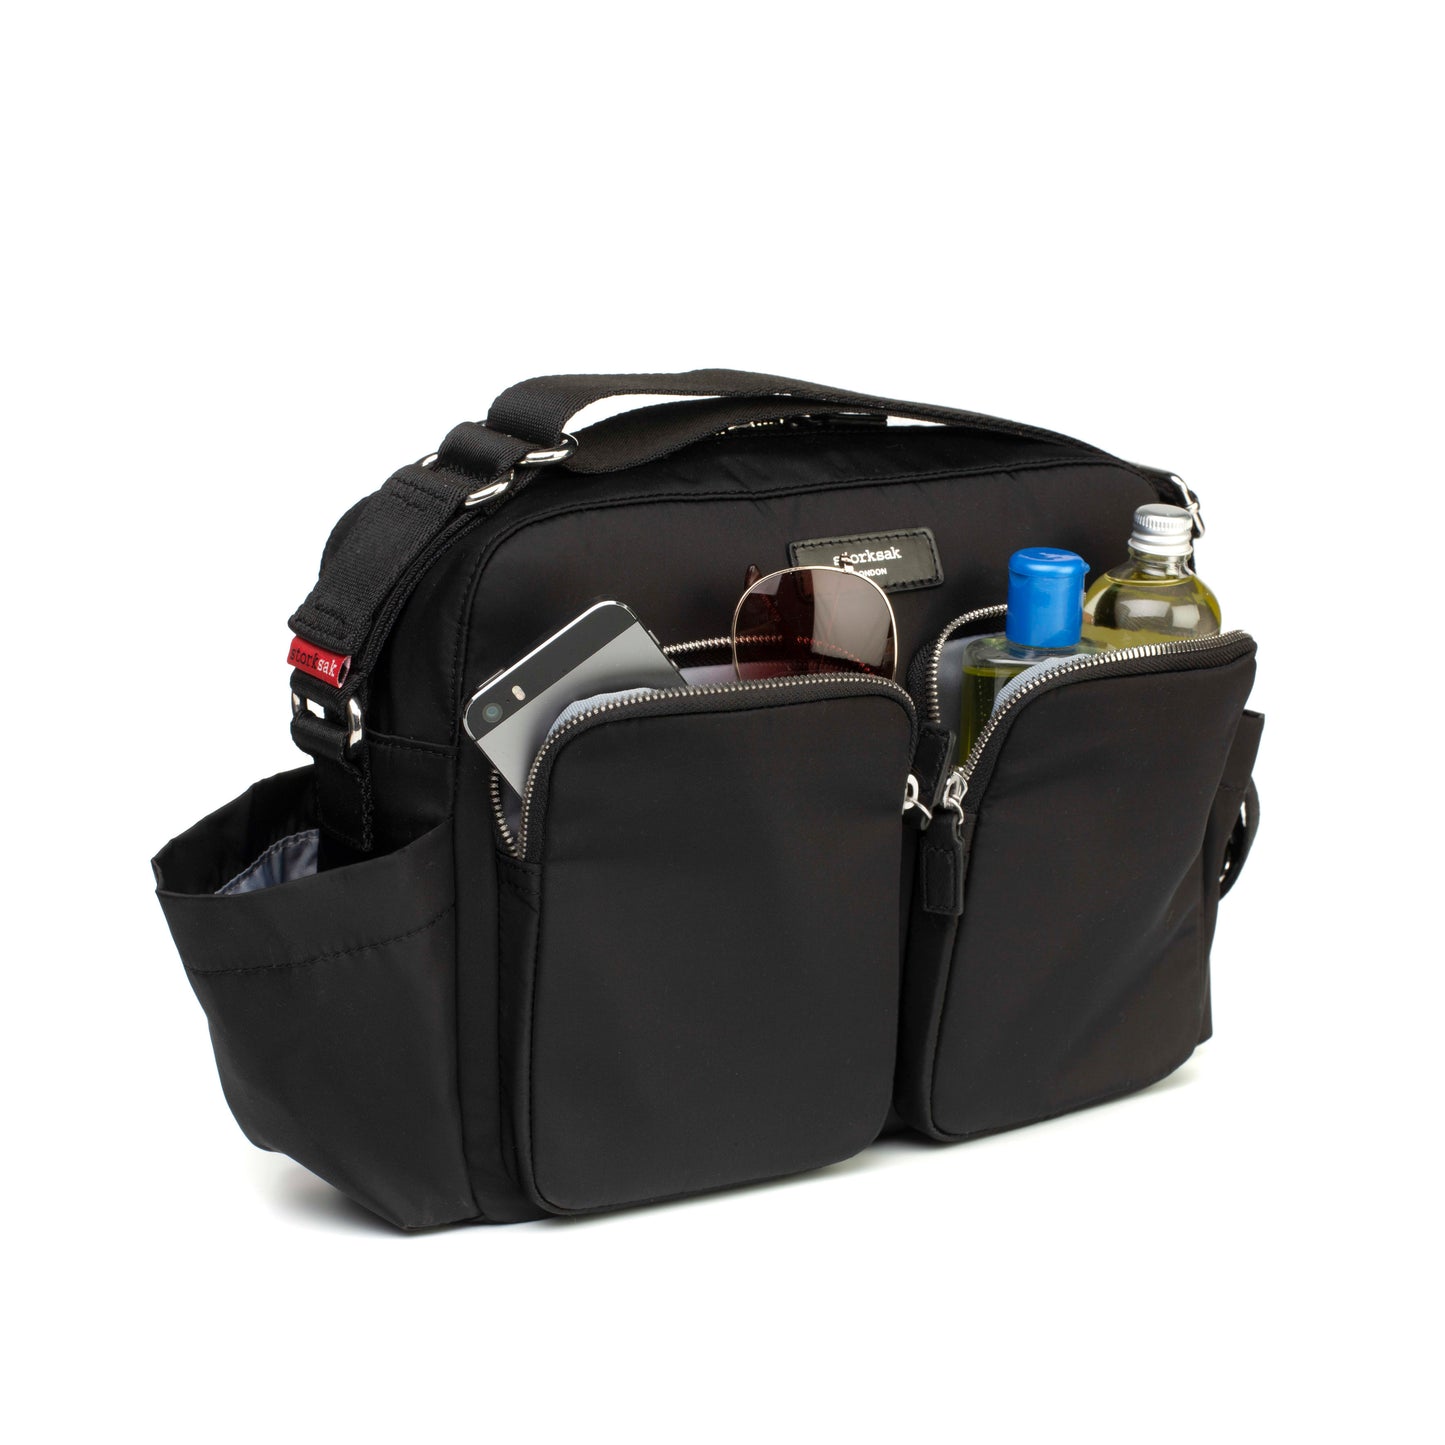 Eco Stroller Diaper Bag - Black